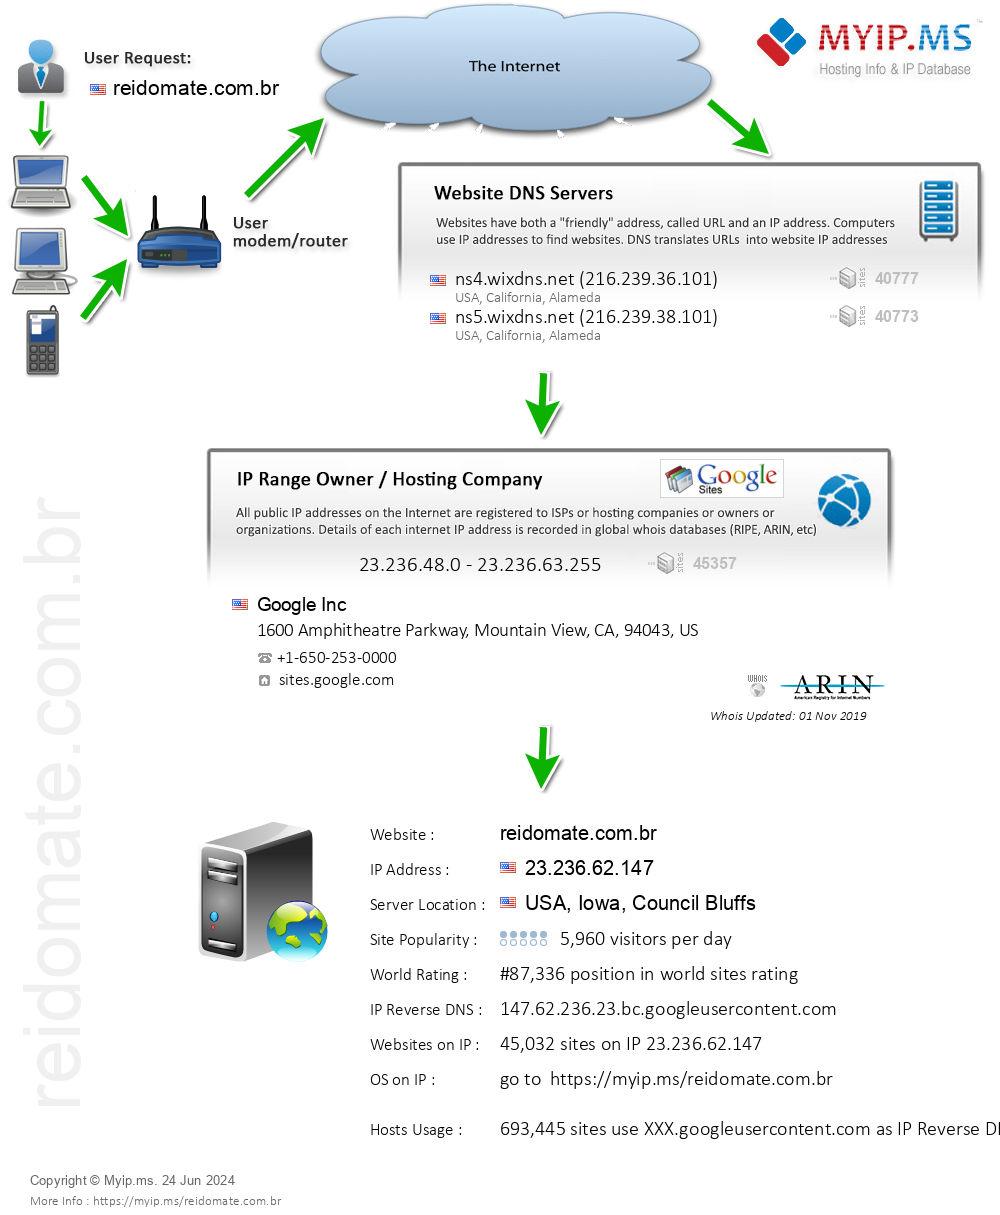 Reidomate.com.br - Website Hosting Visual IP Diagram